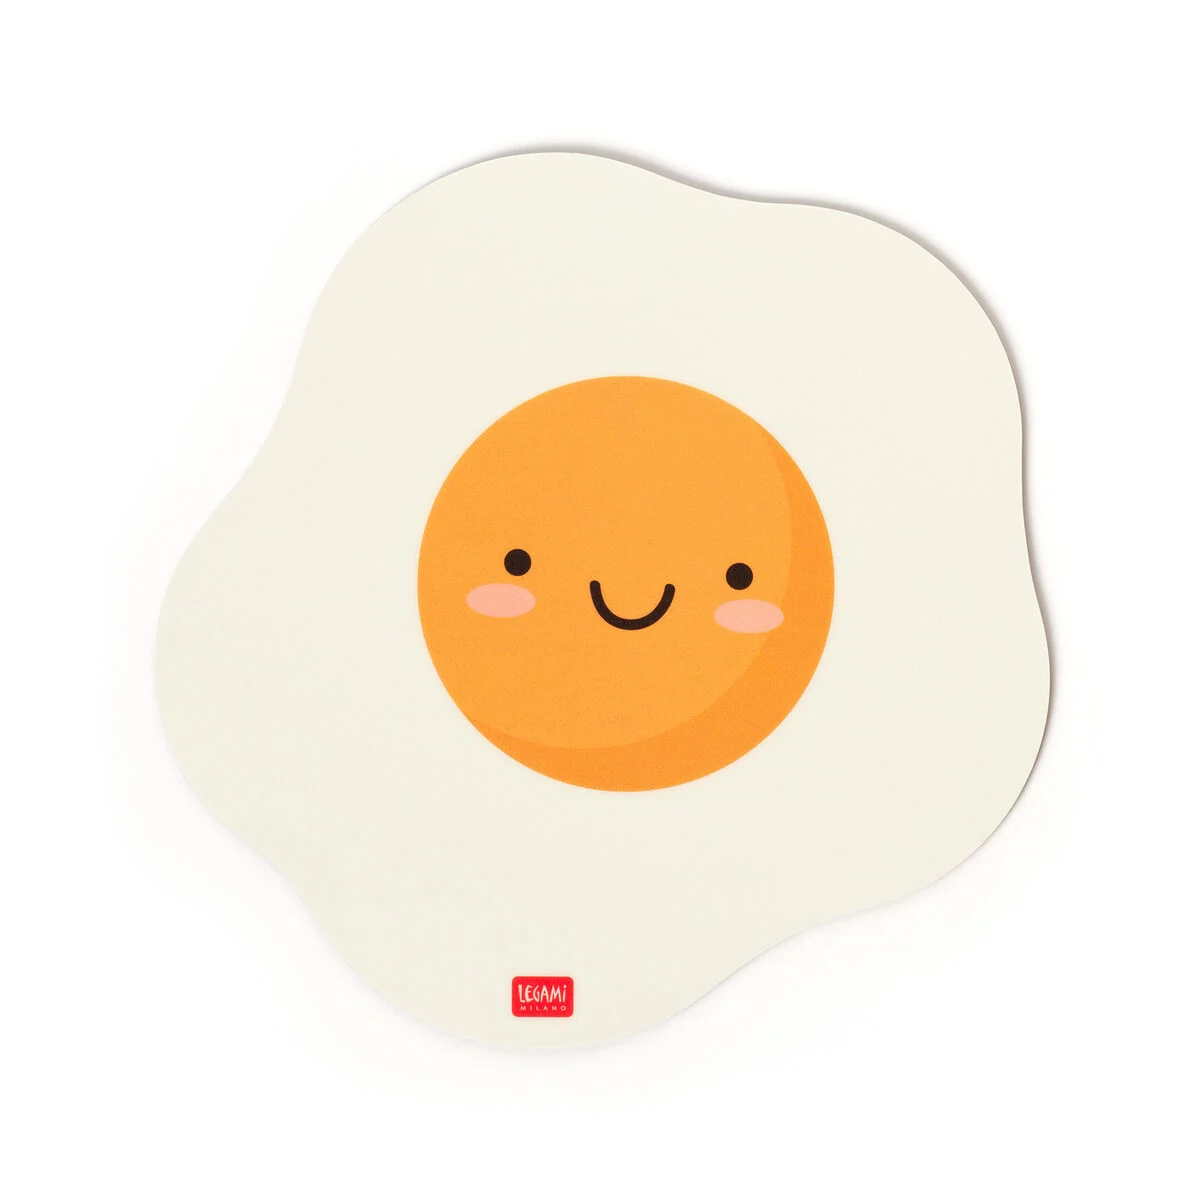 Legami - Muismat - Egg